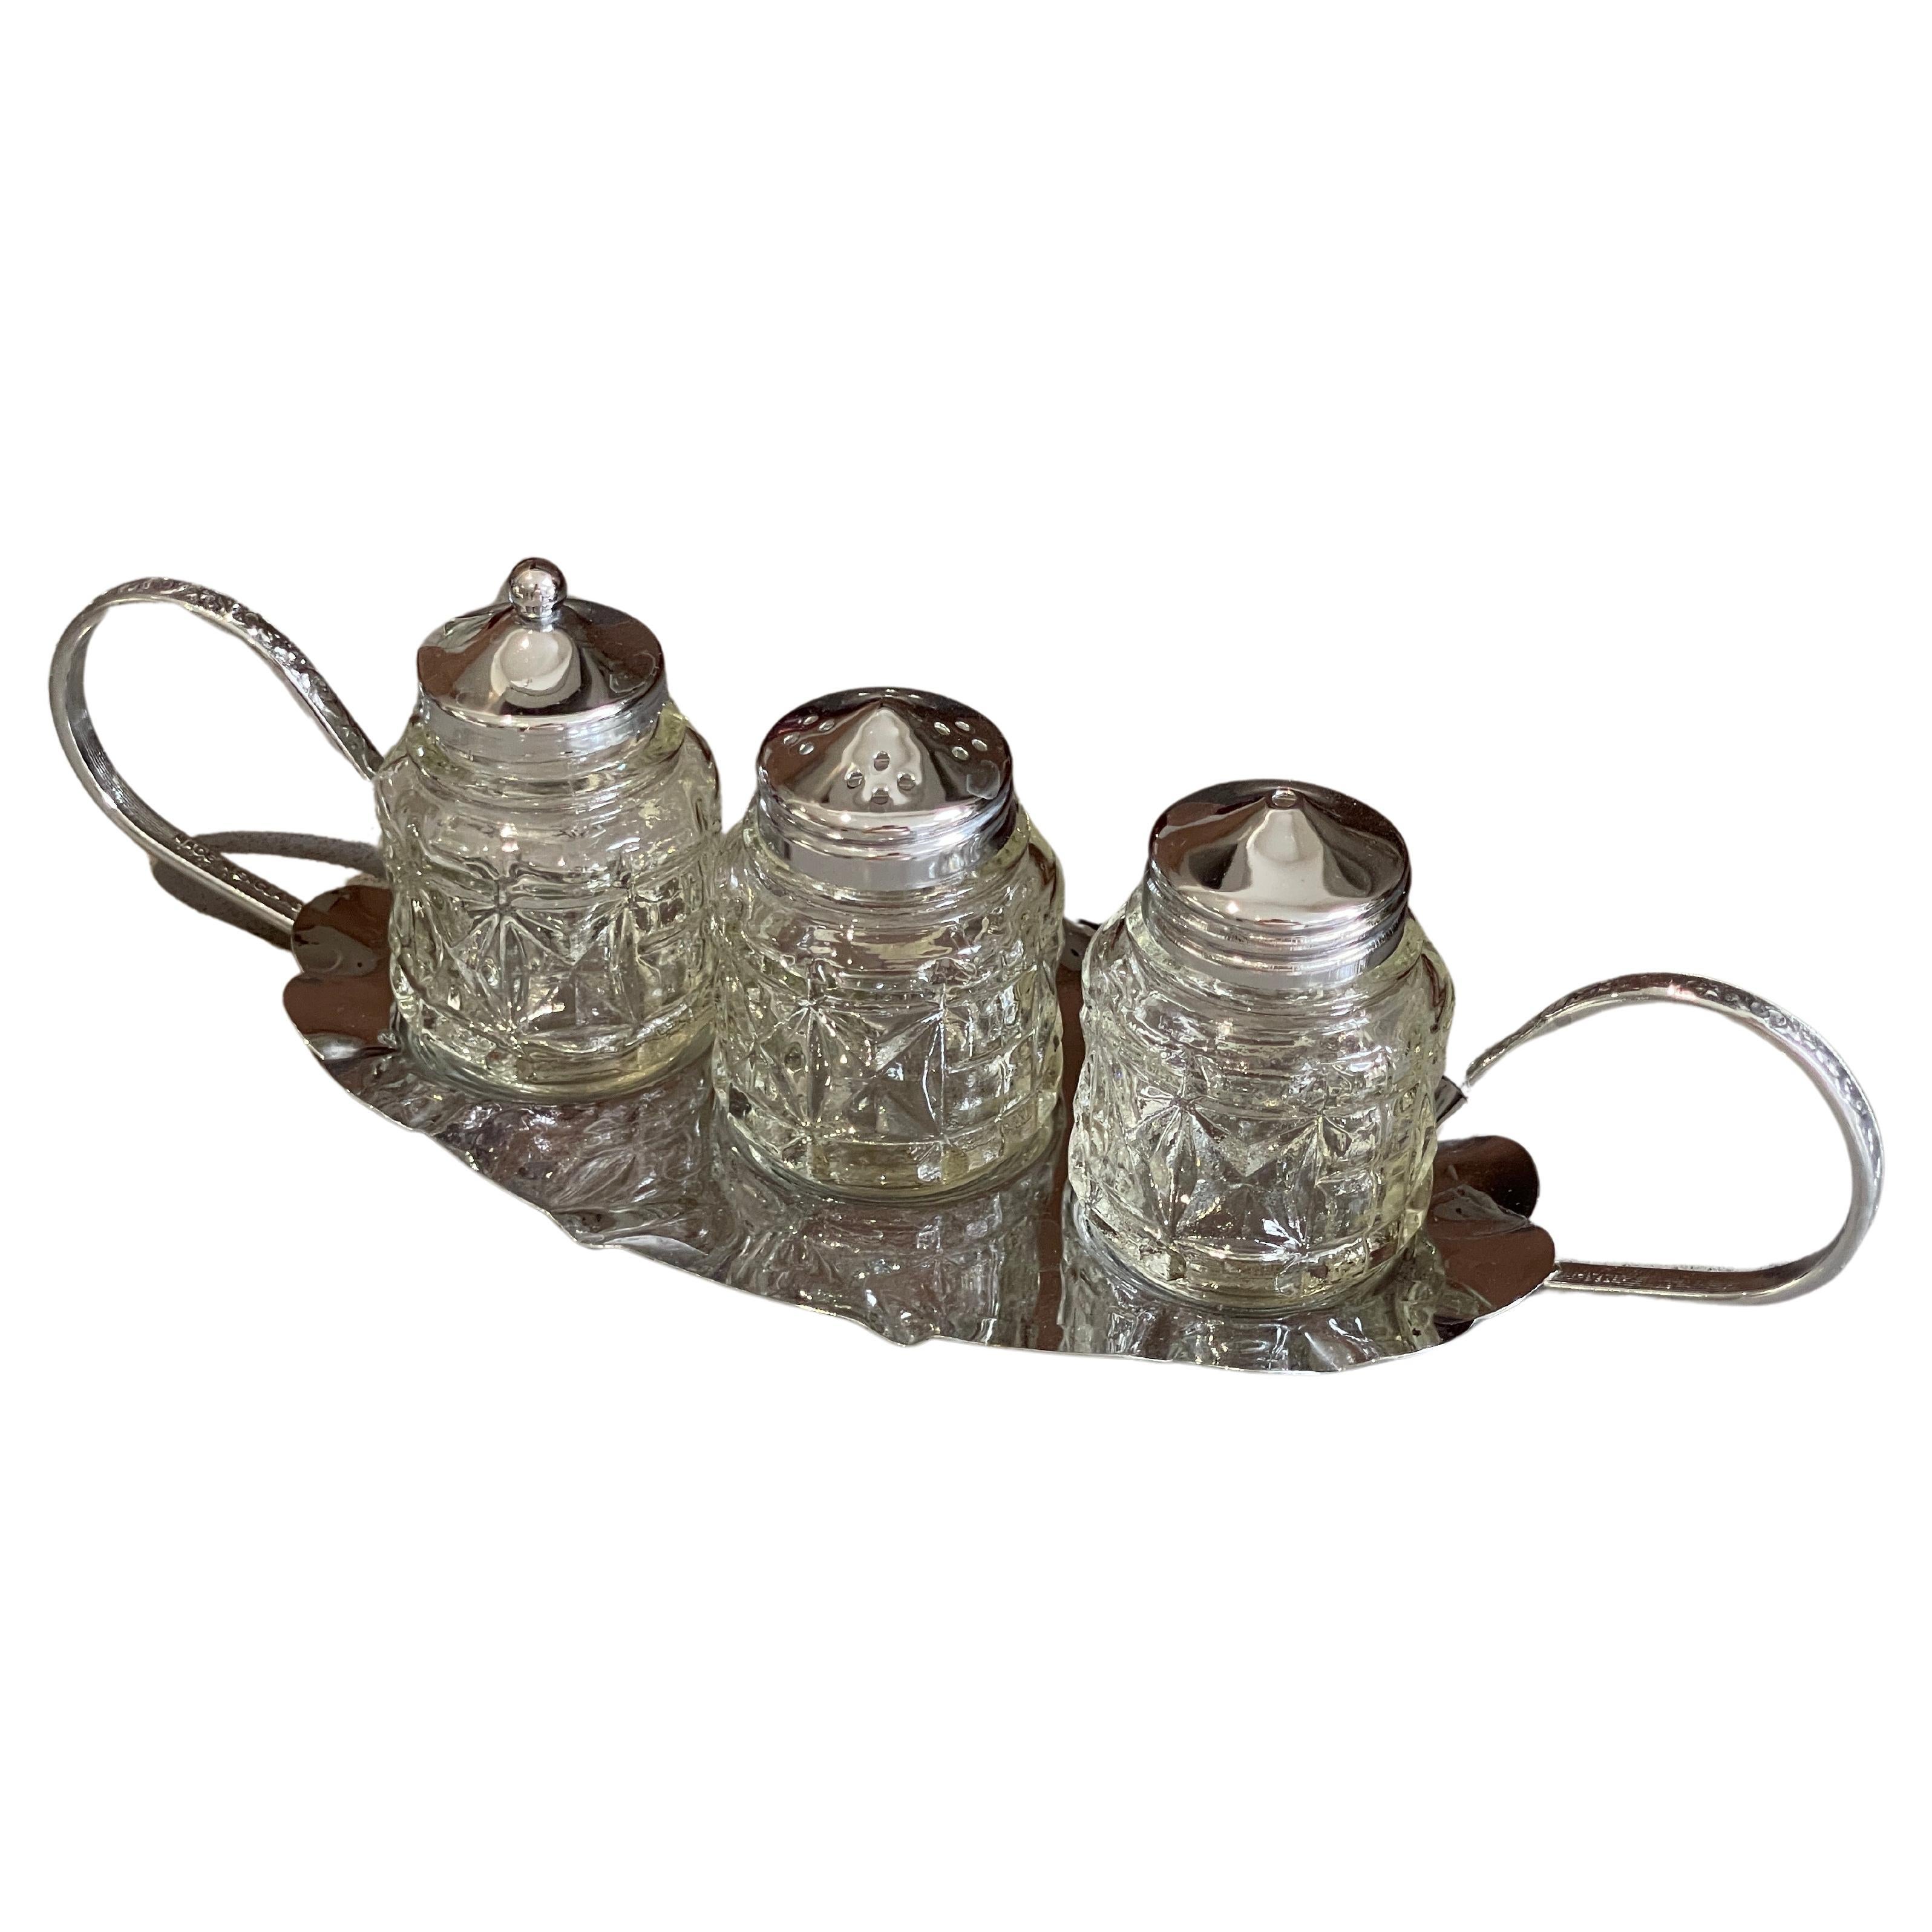 Vintage Silver Pepper & Salt Shaker,  A Set of Salt Shakers Crystal With Tray